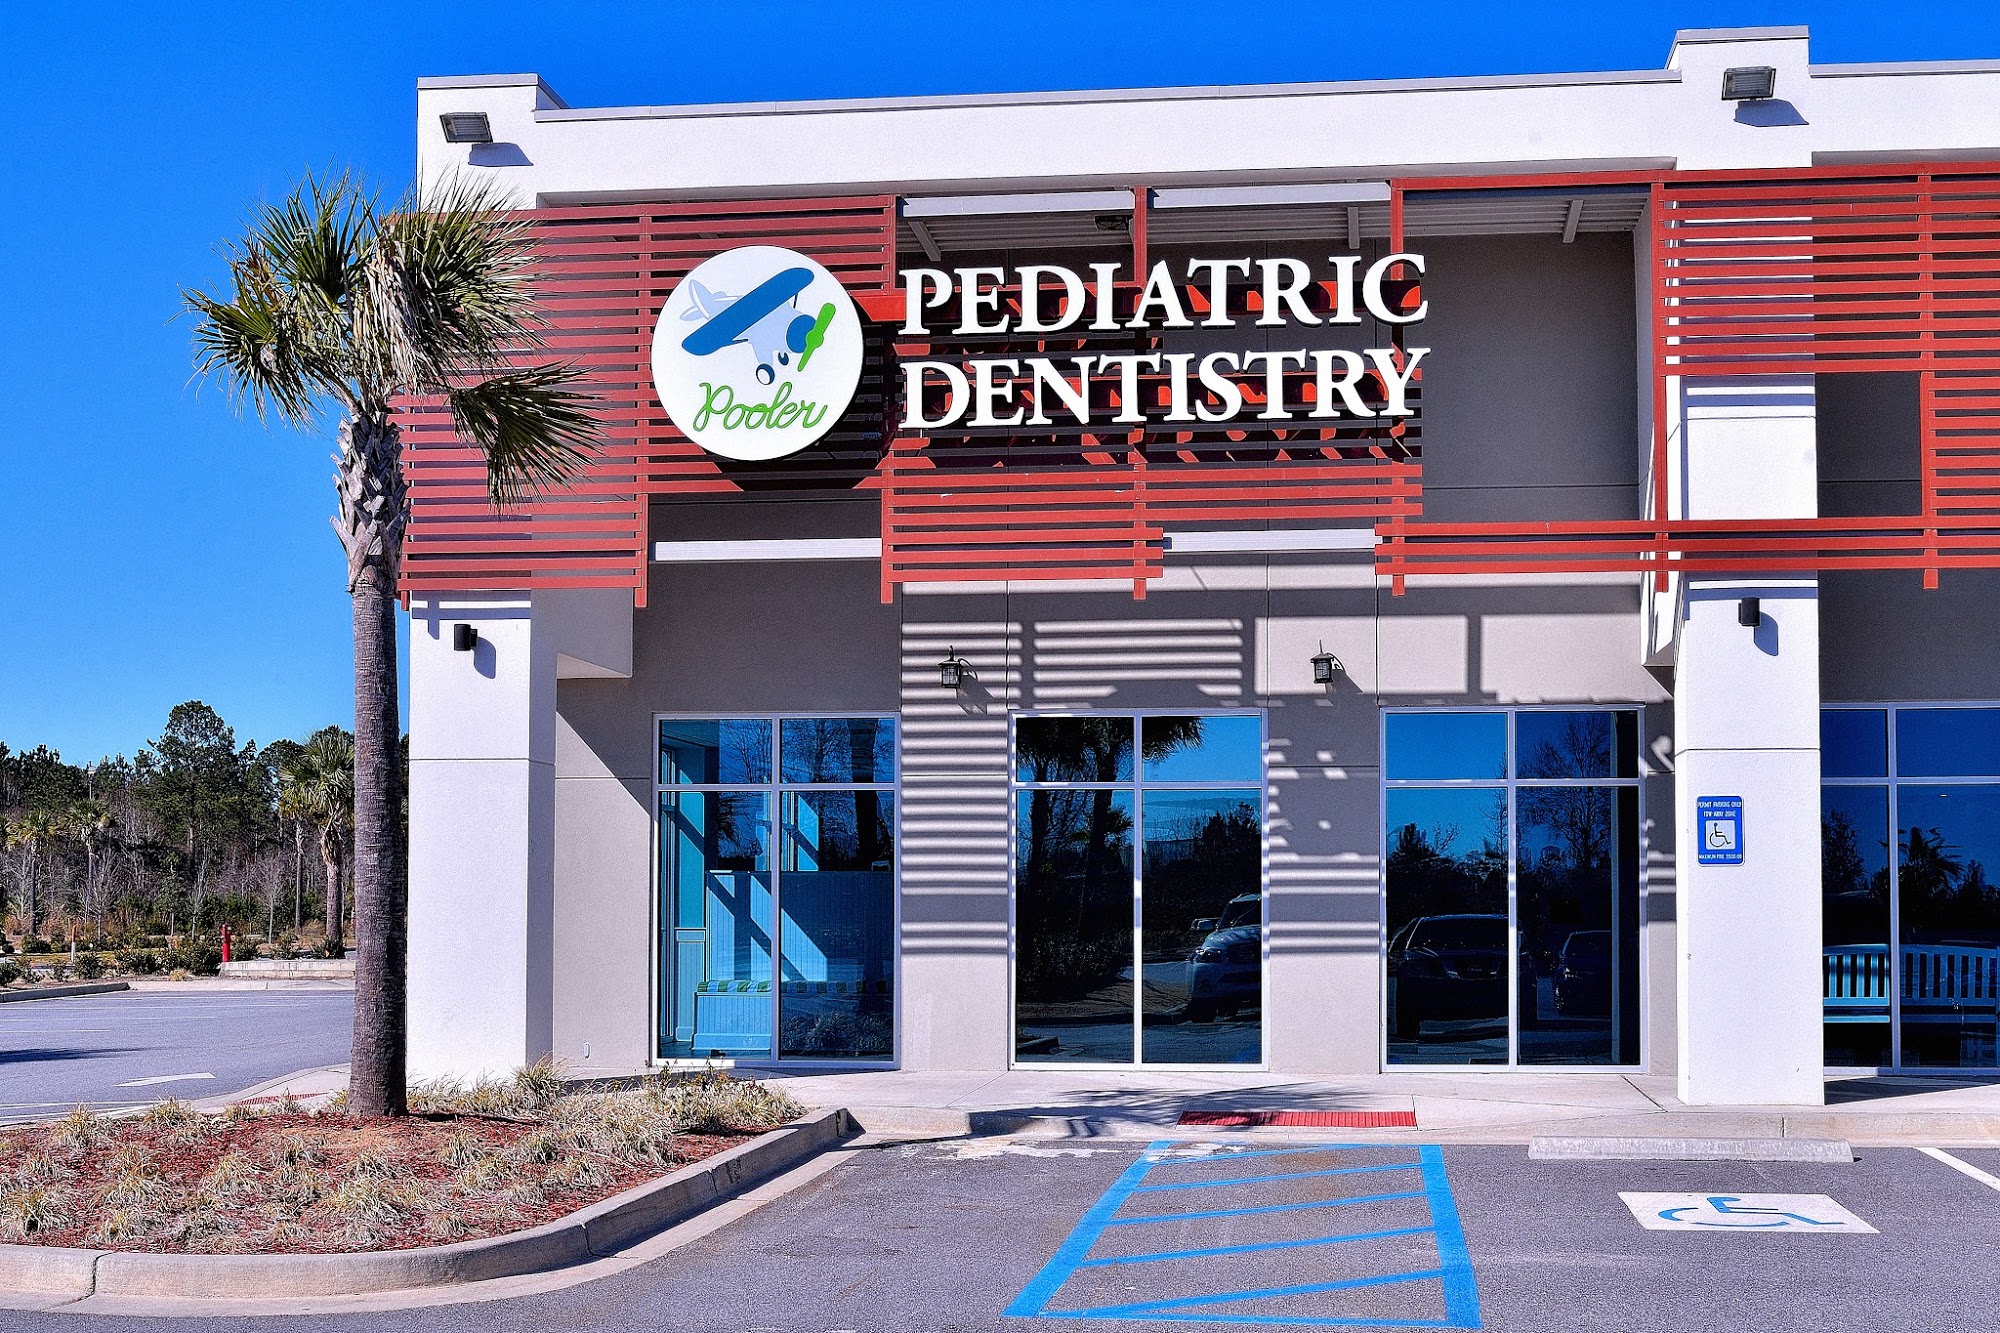 Pooler Pediatric Dentistry